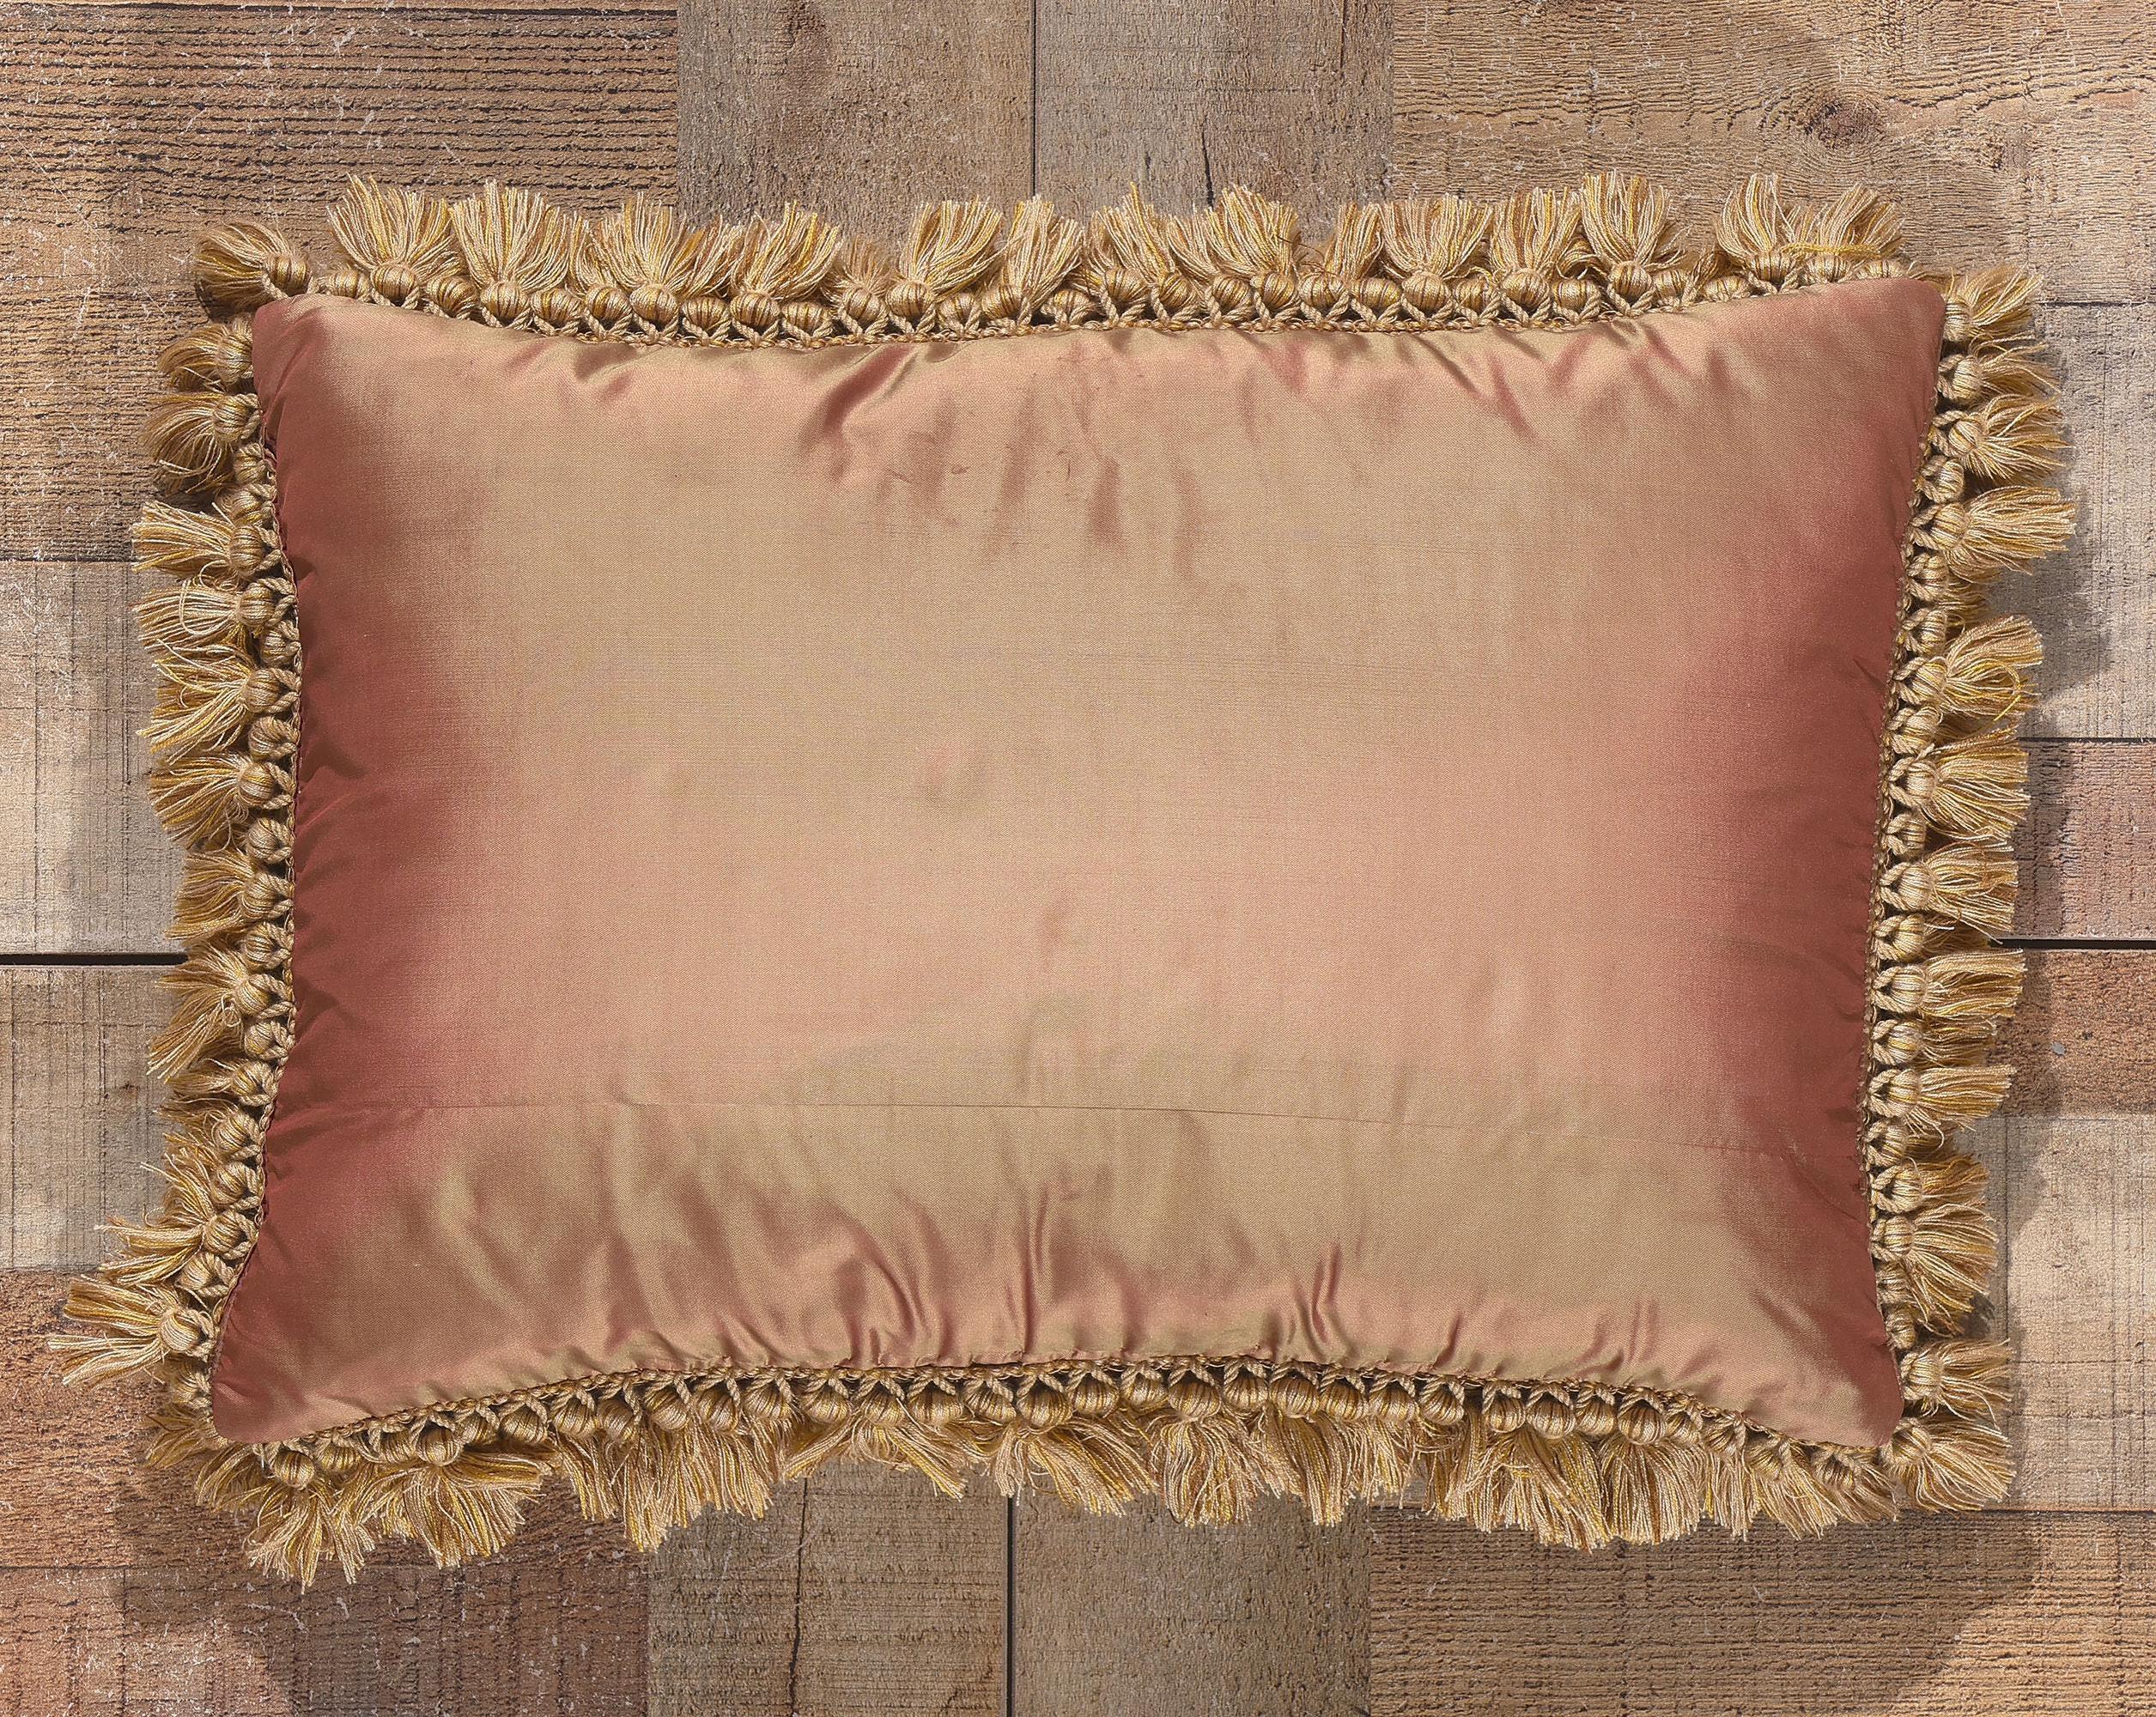 Antique French Aubusson Pillow with Baroque Style, Tête de Femme Aphrodite For Sale 4